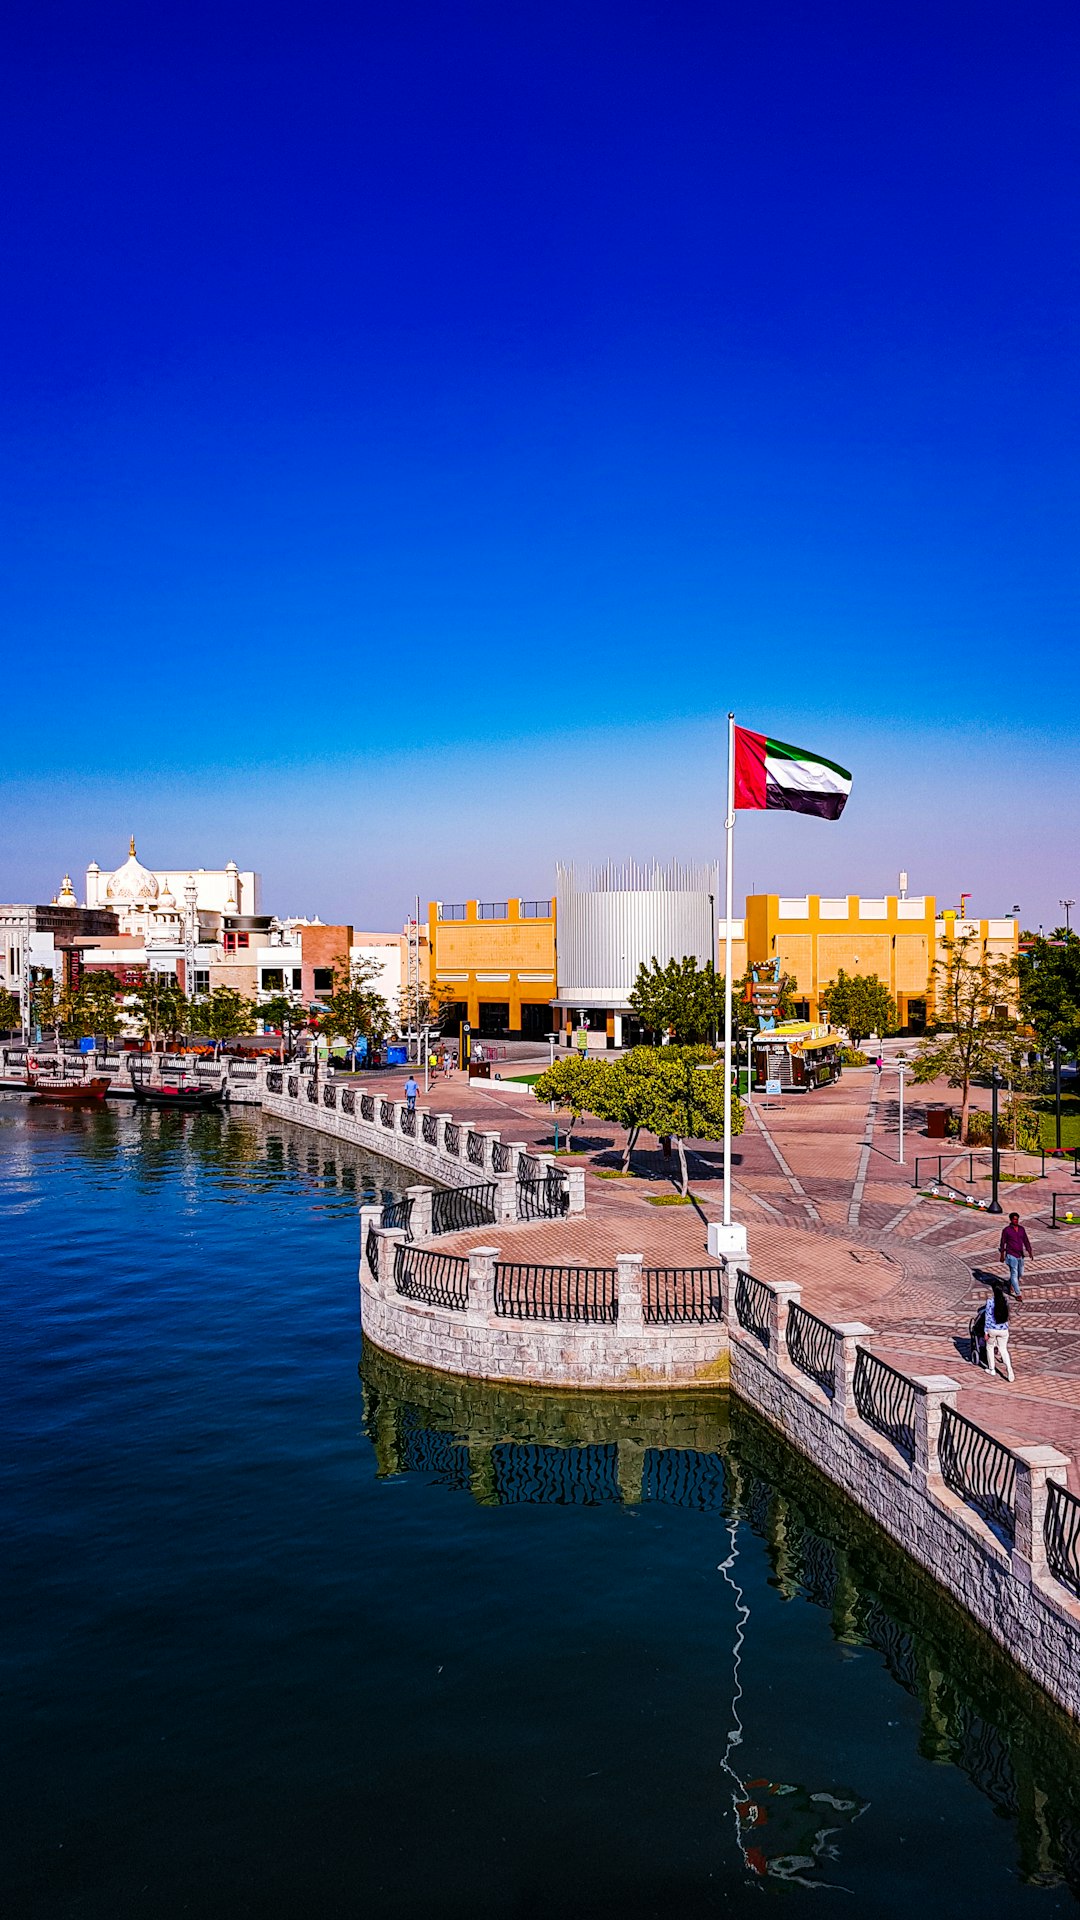 Town photo spot Riverland Dubai - Sheikh Zayed Road - Dubai - United Arab Emirates United Arab Emirates